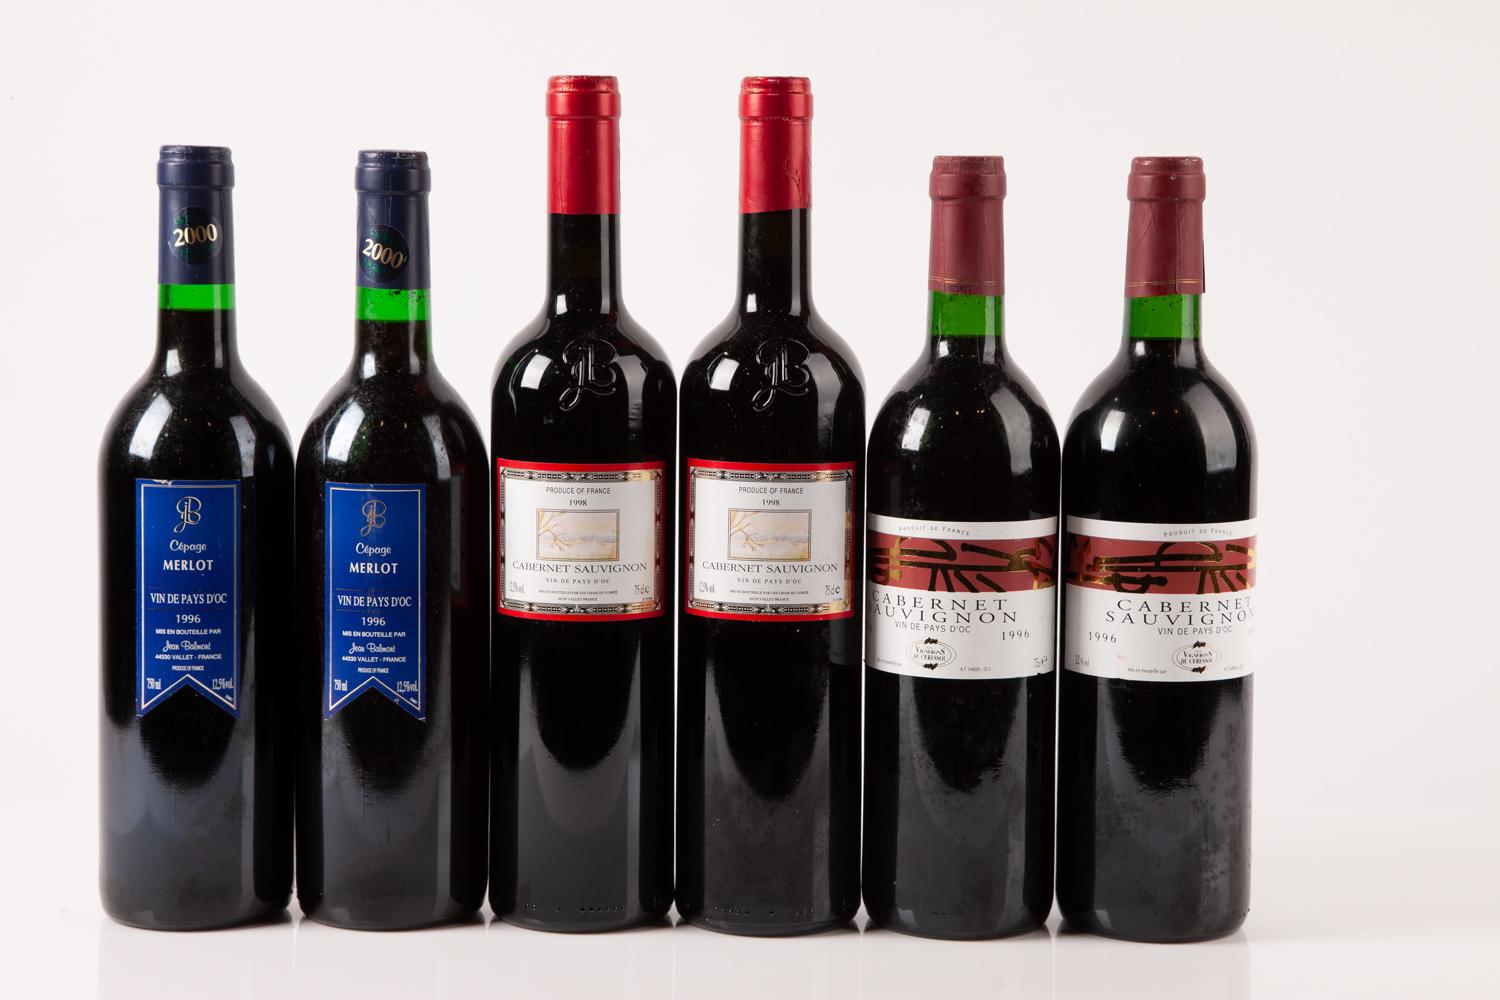 Ten bottles of Vin de Pays d'Oc Red Wine in one lot